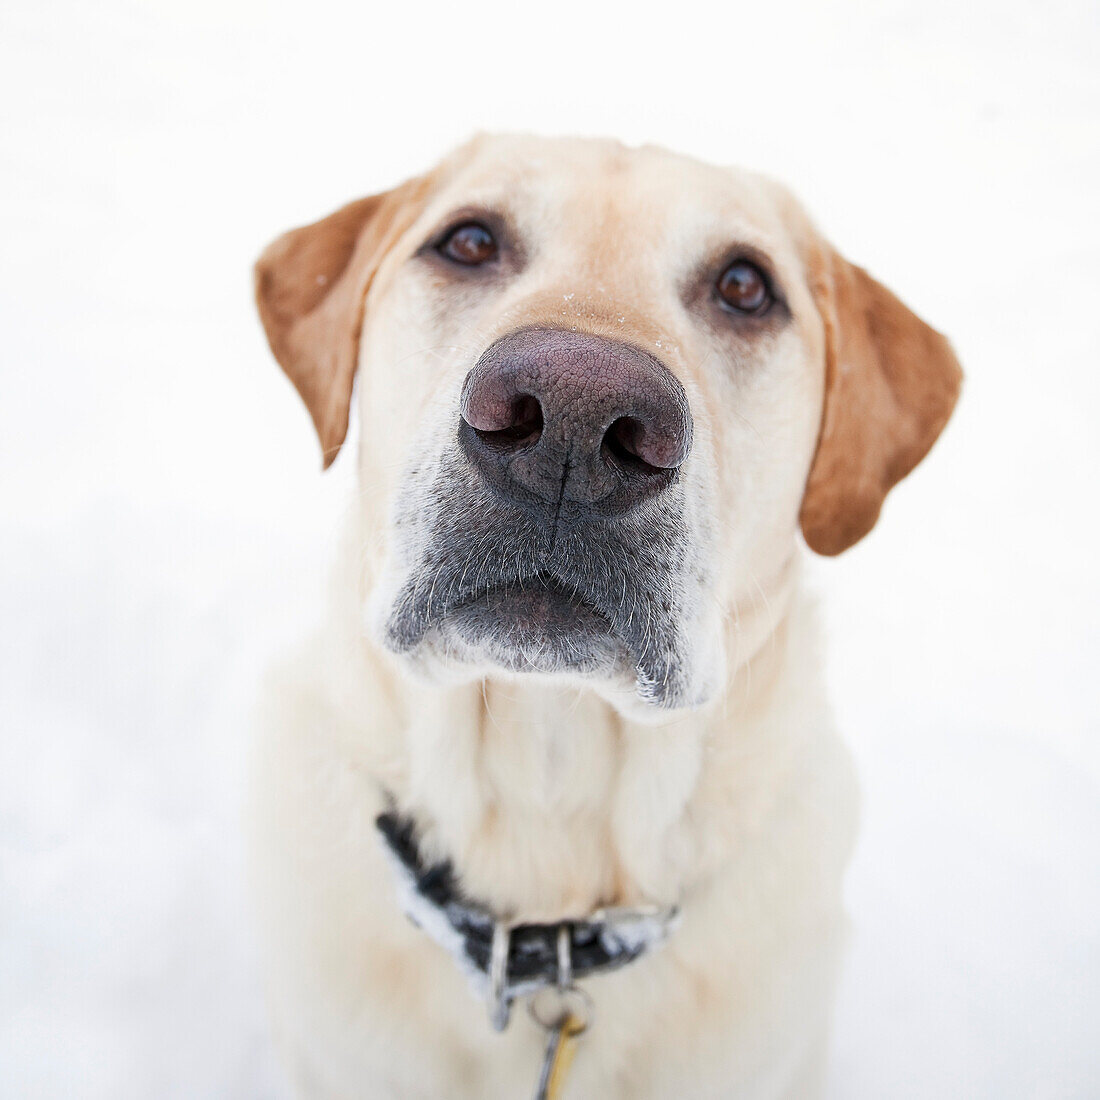 Portrait Of A Yellow Labrador Retriever Dog, Outdoors On A Snowy Winter Day. Winnipeg, Manitoba, Canada.